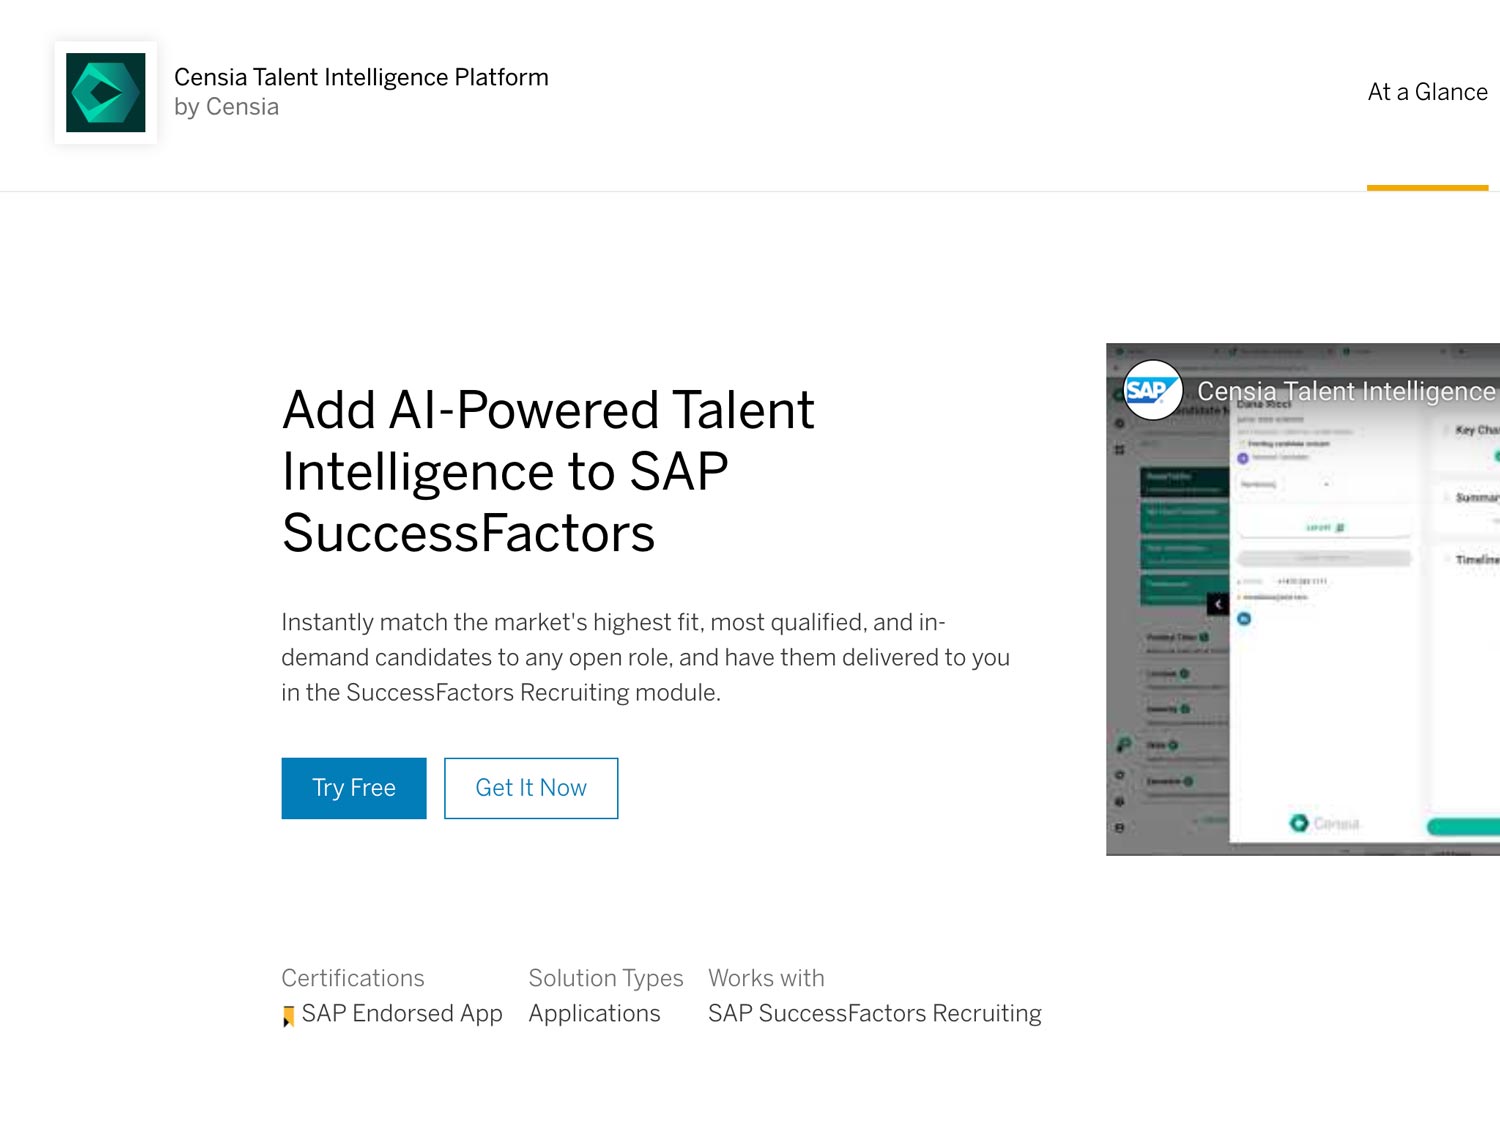 SAP censia talent intelligence platform